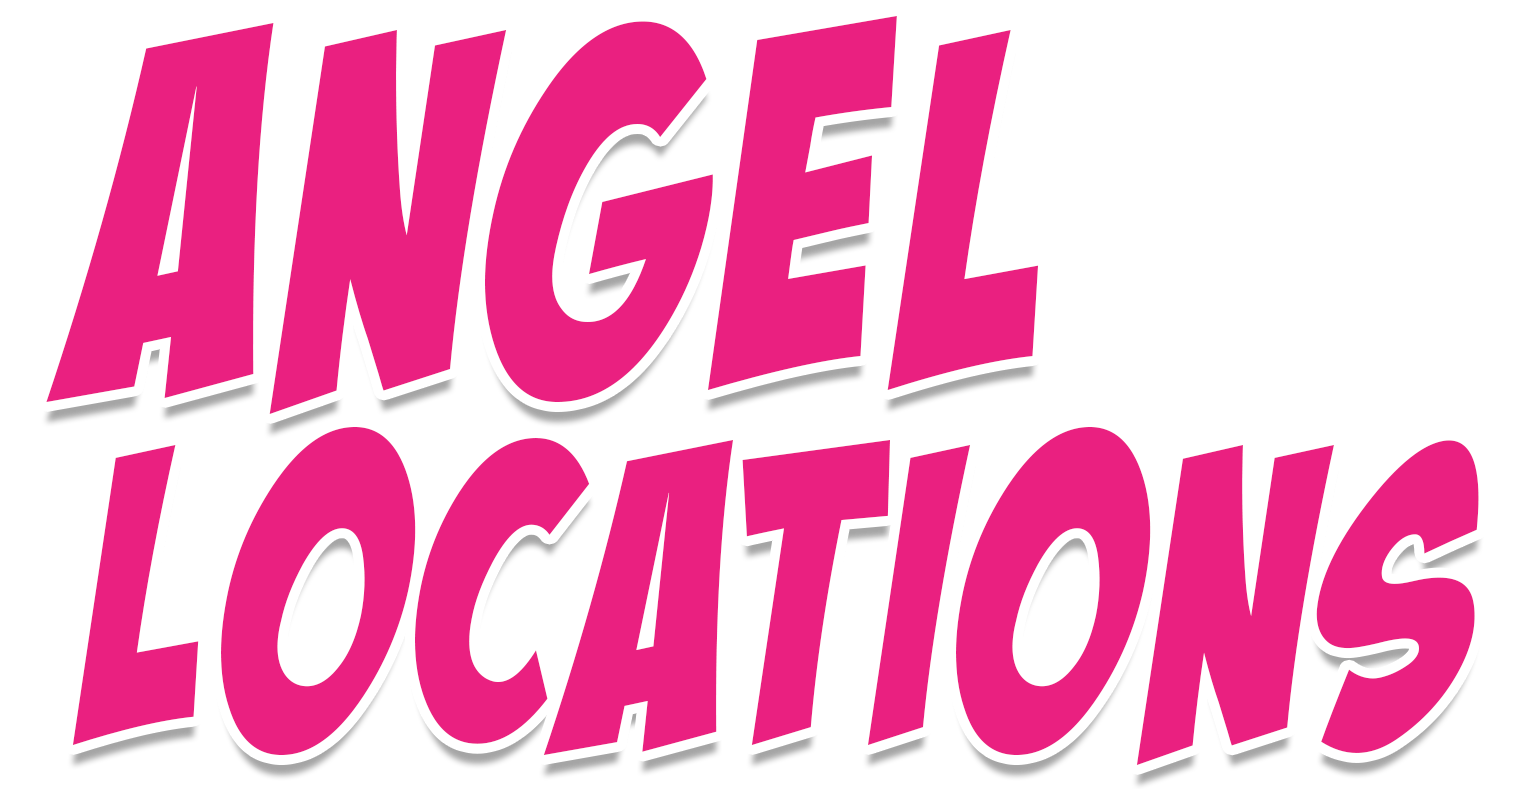 AA-tangel-locations-text